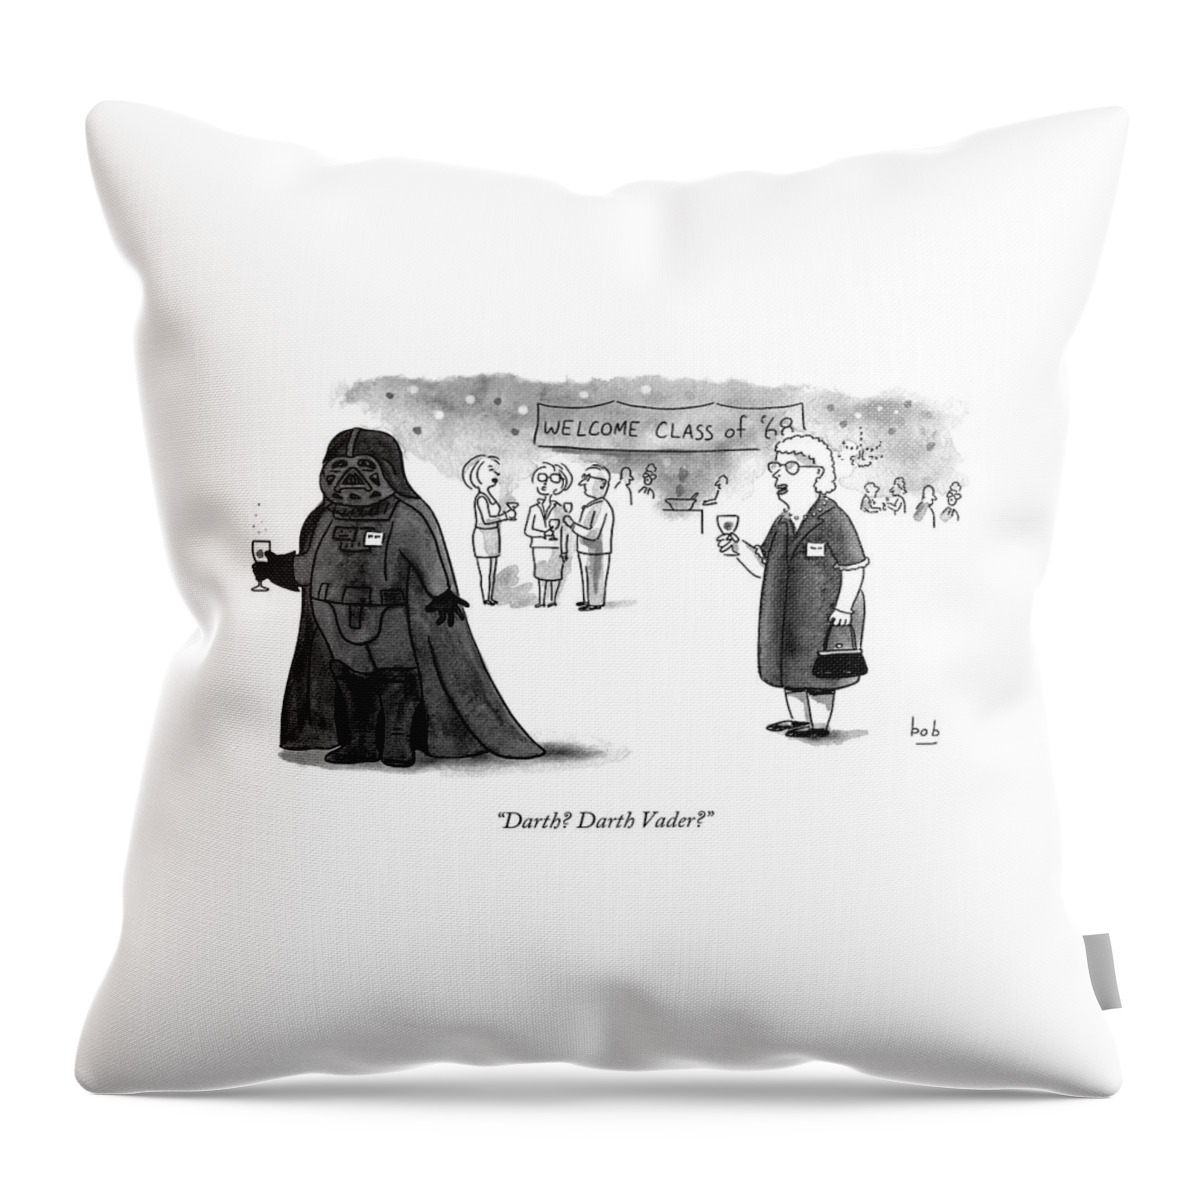 Darth? Darth Vader? Throw Pillow